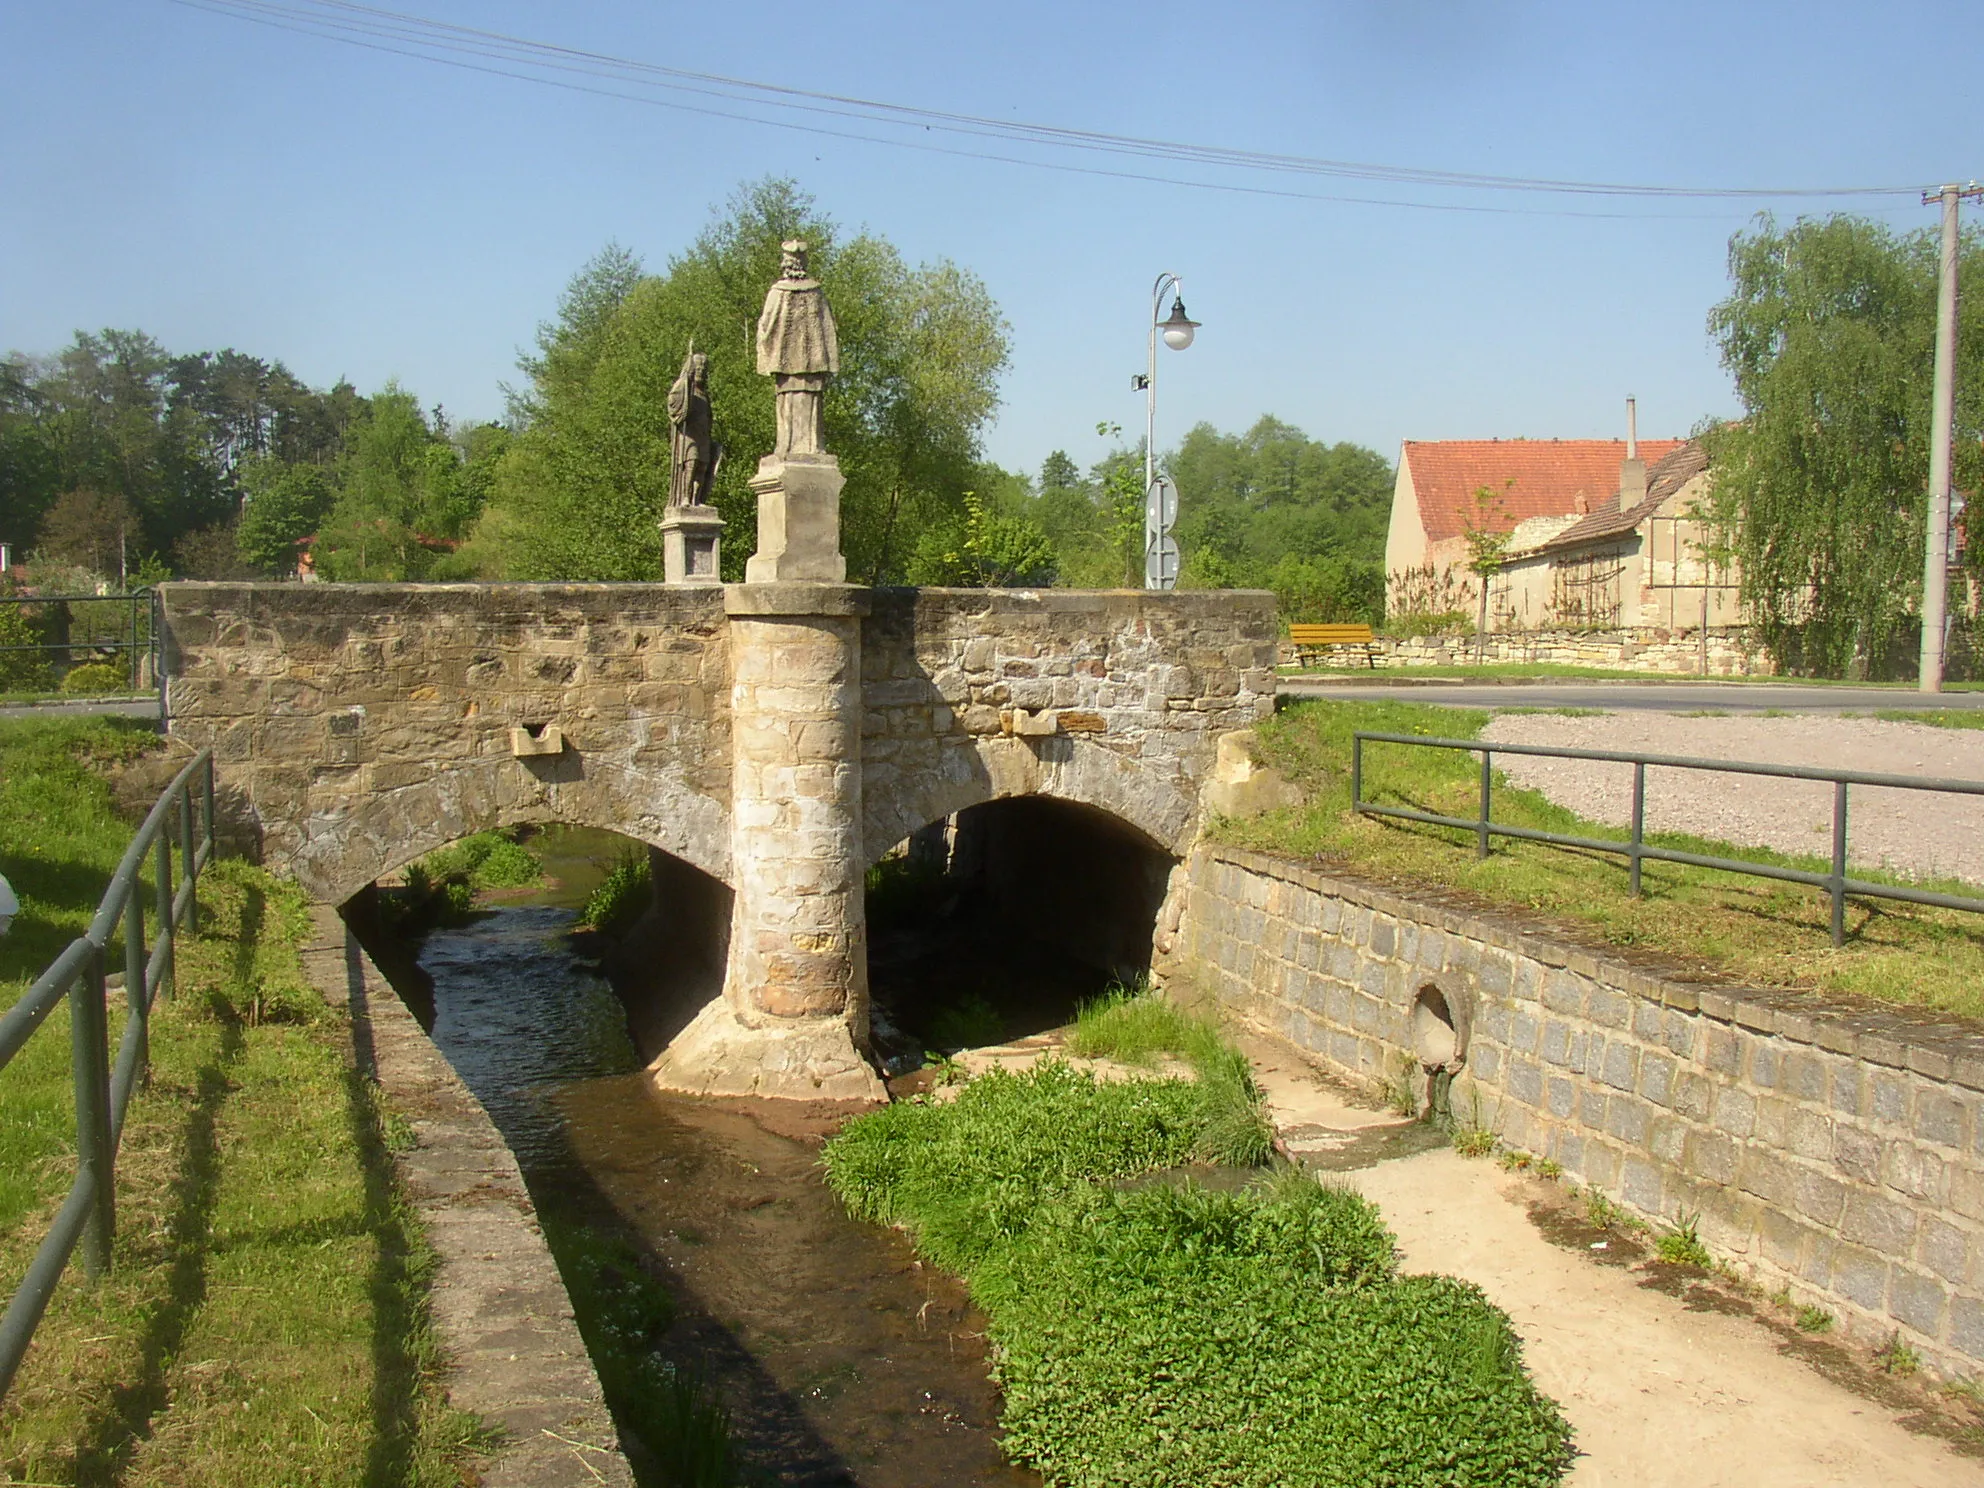 Photo showing: Stone arch bridge over the Bakovský potok stream in Královice village, Kladno District, Czech Republic. The bridge is decorated with pair of statues depicting St Wenceslas and St John Nepomucene.